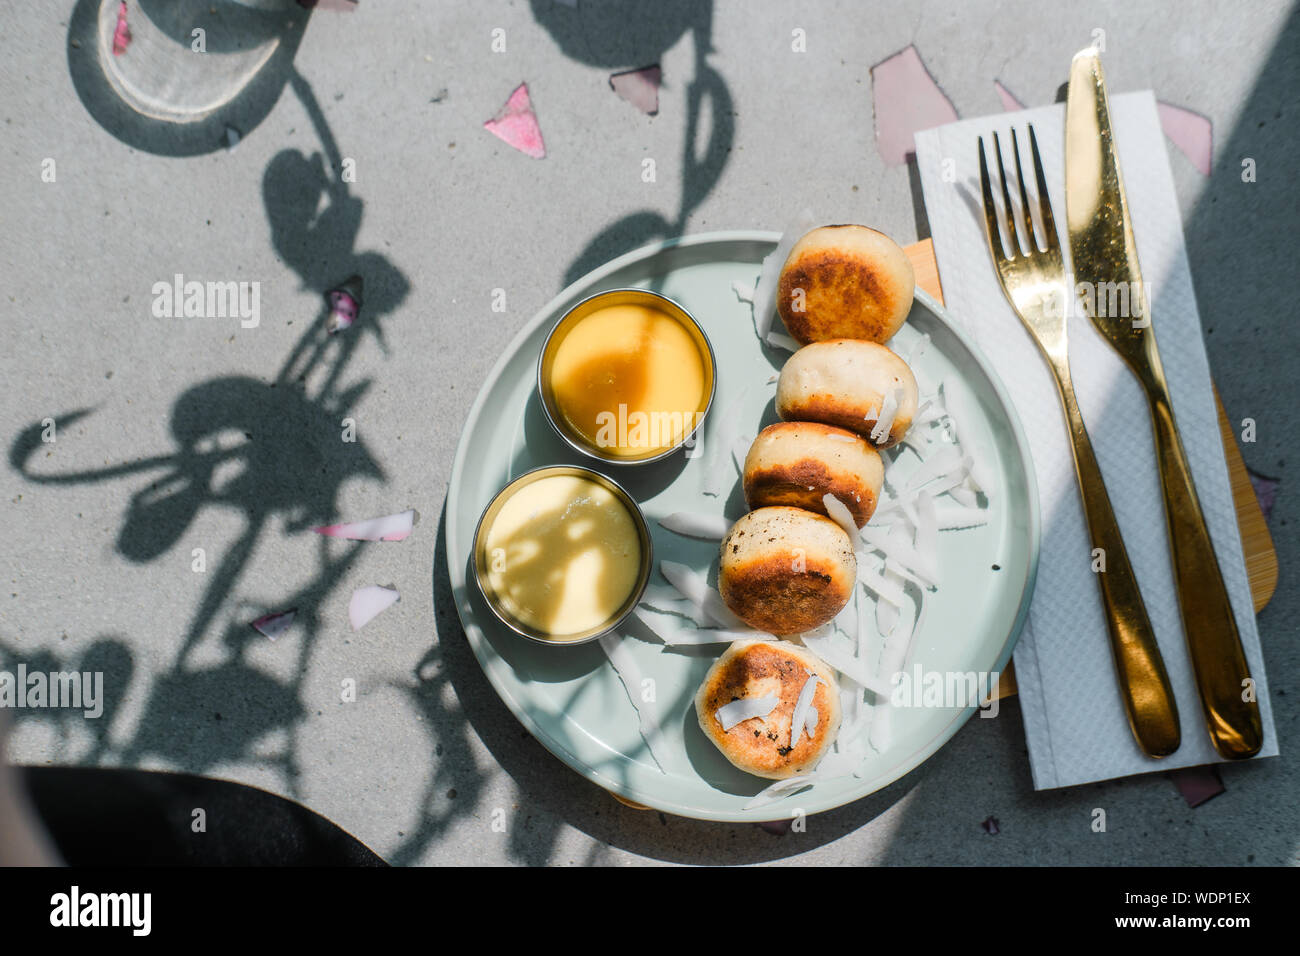 Vegan tofu cheese pancakes on blue plate, gray concrete table. Direct sun light, focus on shadows. Food blog photography concept. Overhead Stock Photo